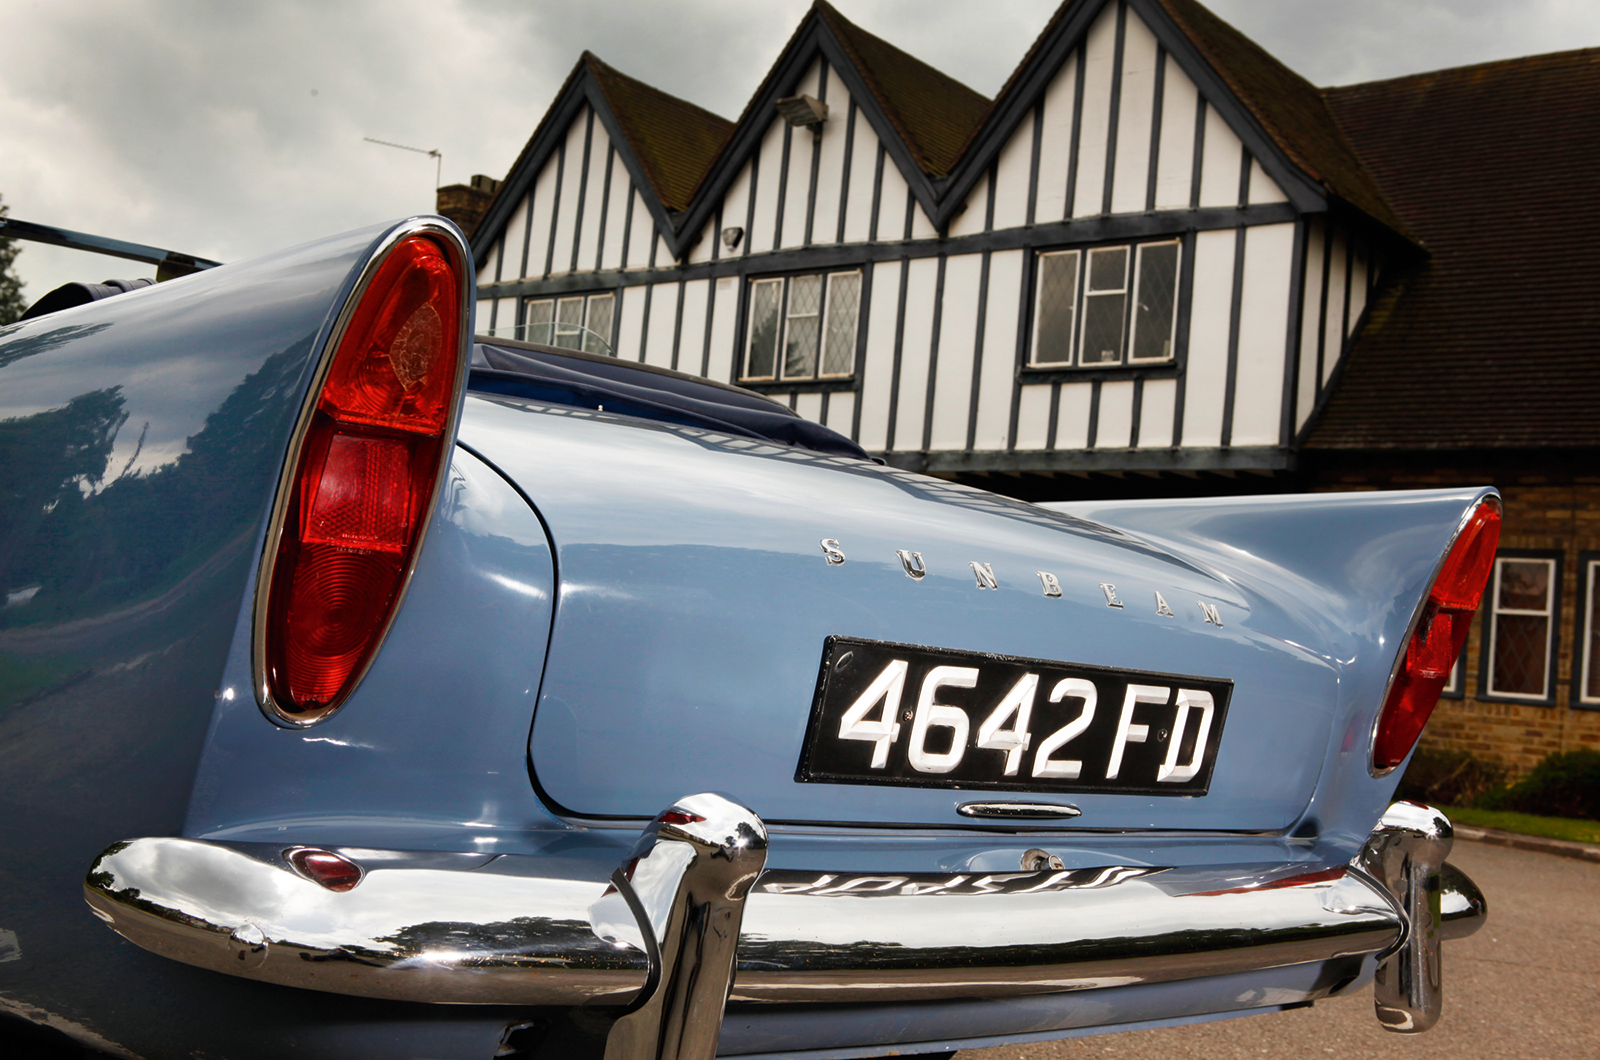 Classic & Sports Car – Driving the original James Bond car, a Sunbeam Alpine